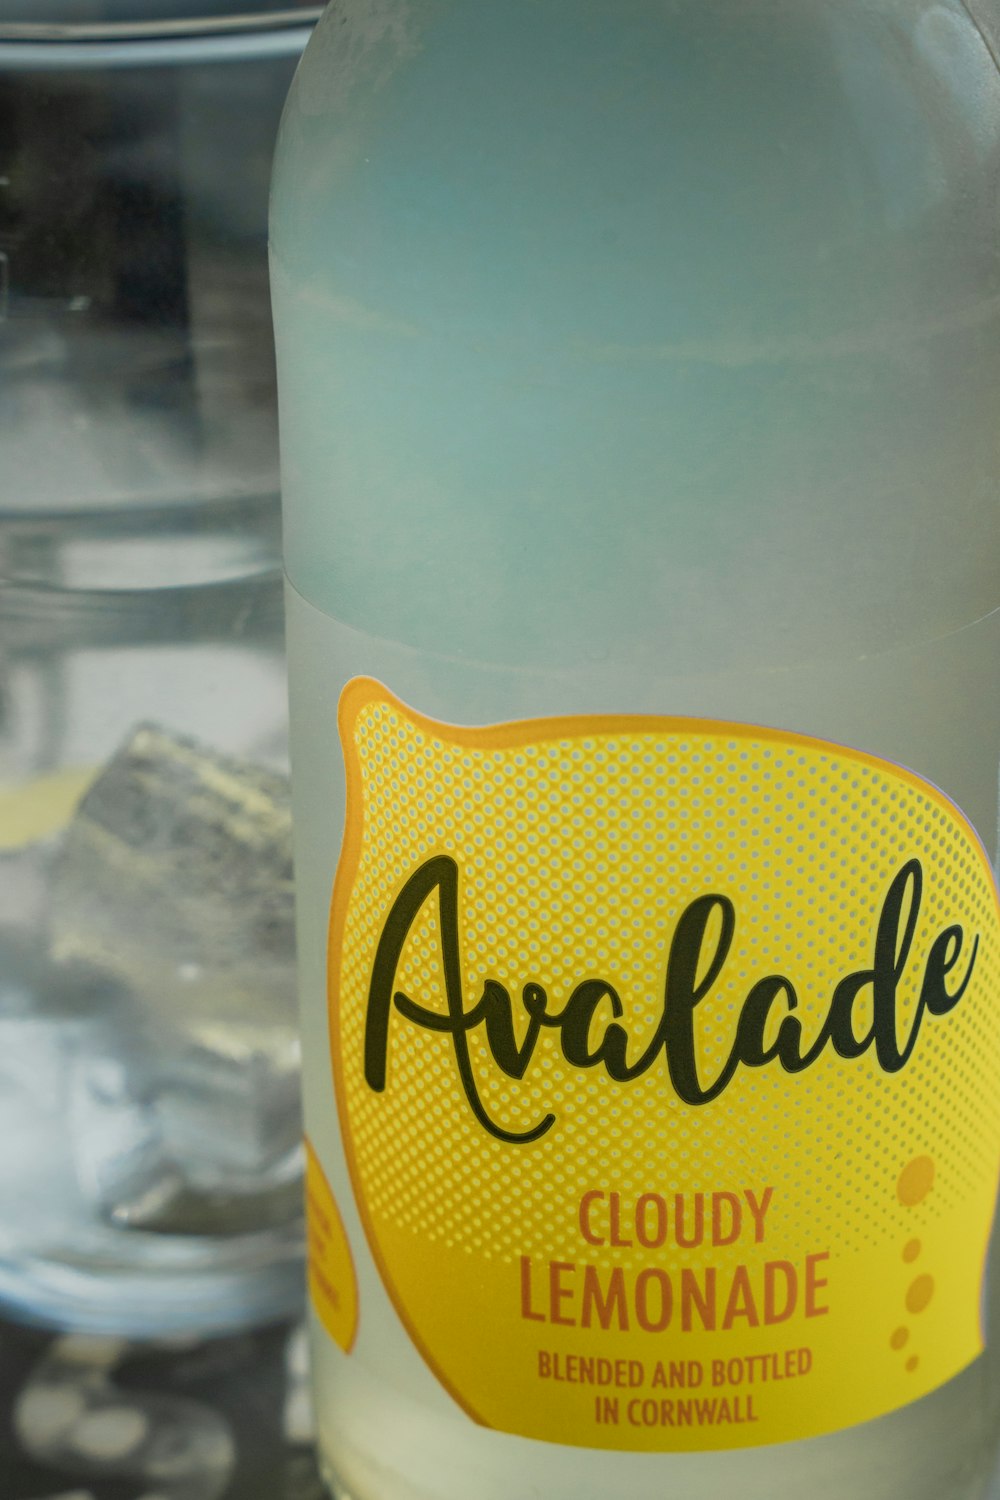 a close up of a bottle of lemonade